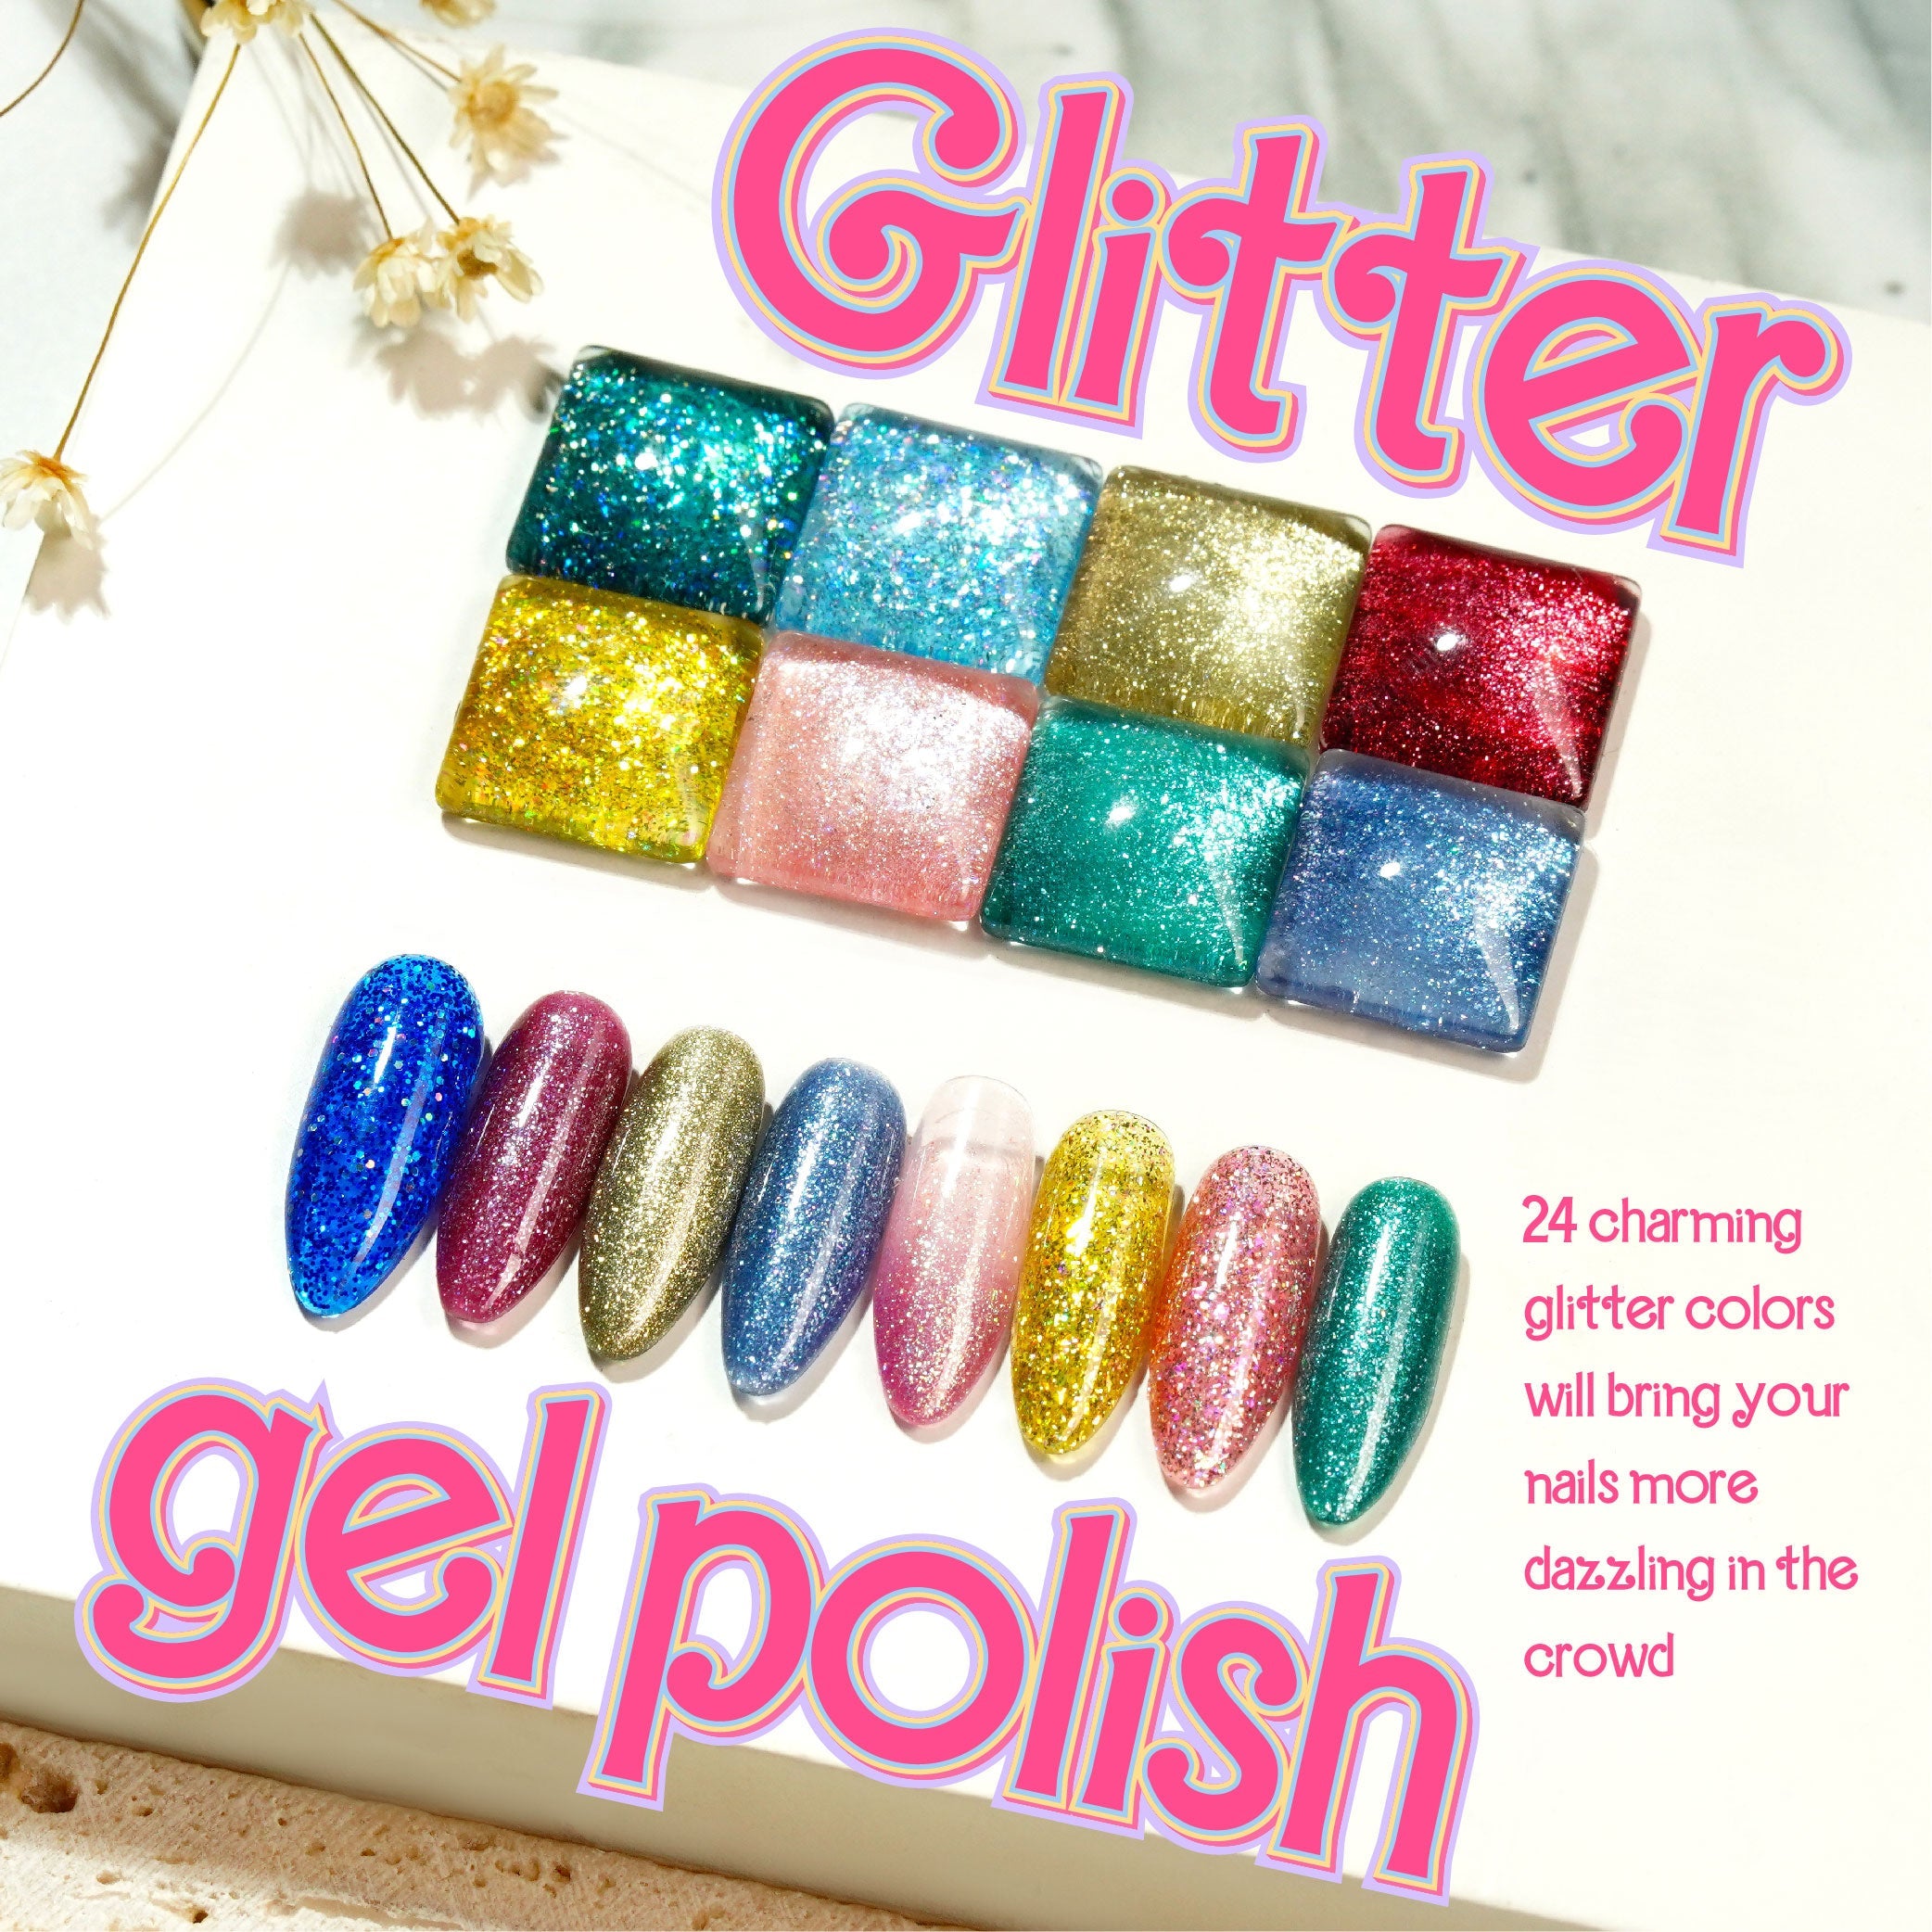 LAVIS Glitter G03 - 01 - Gel Polish 0.5 oz - Barbie Collection